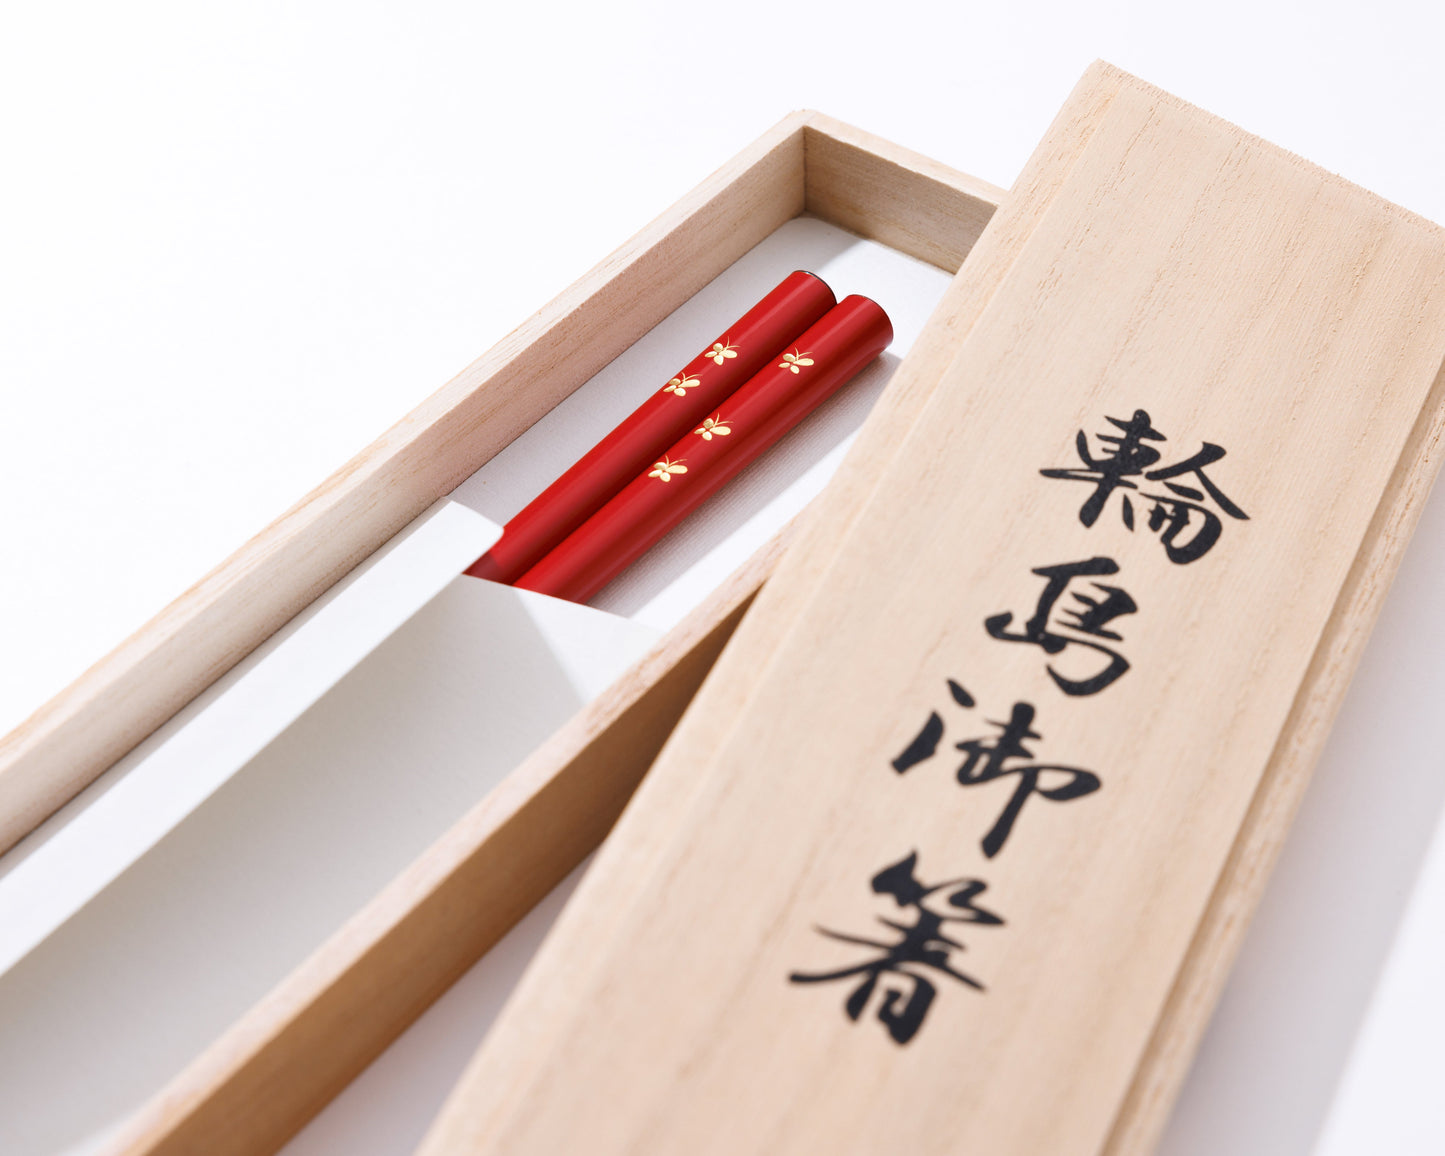 Wajimaya Zenhito original chopsticks (vermilion/butterfly gold)